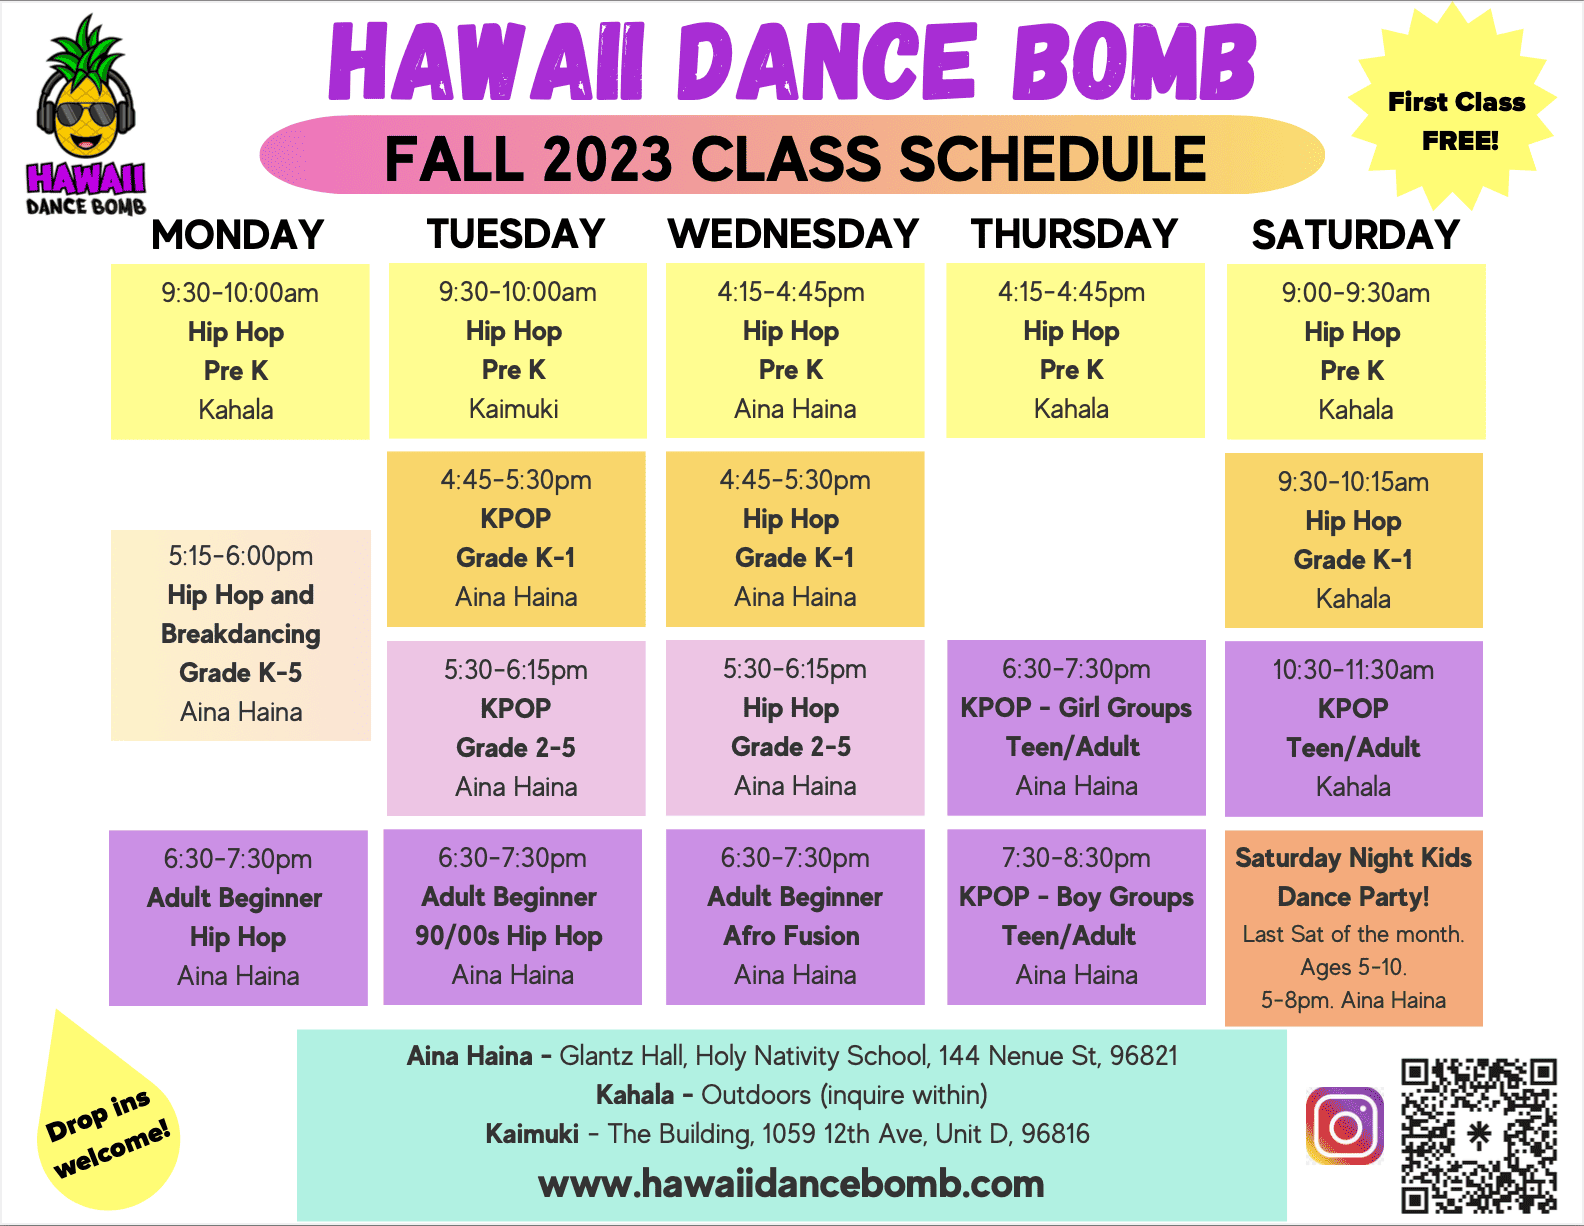 Hawaii Dance Bomb Dance Studio and Silent Disco Fall Schedule